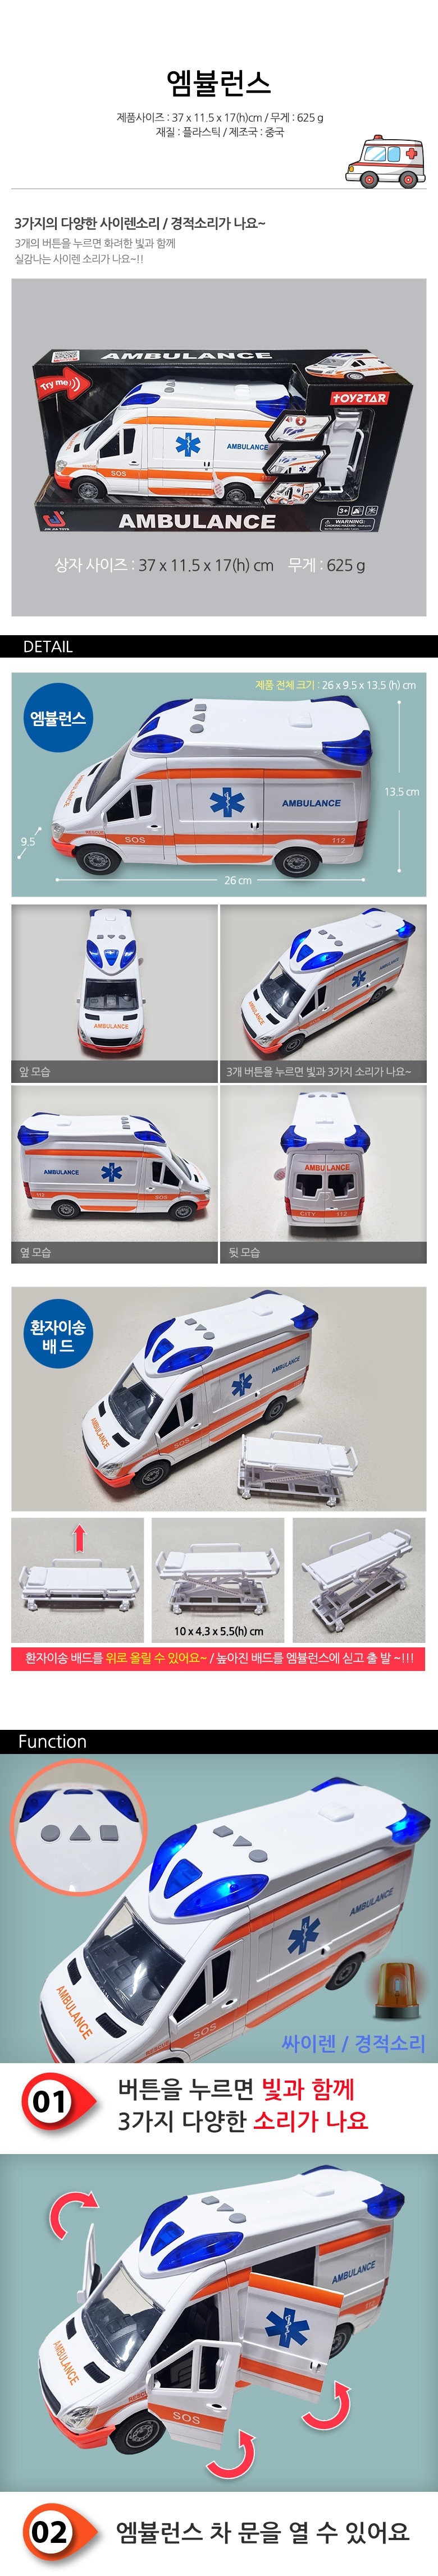 ambulance25000_1.jpg